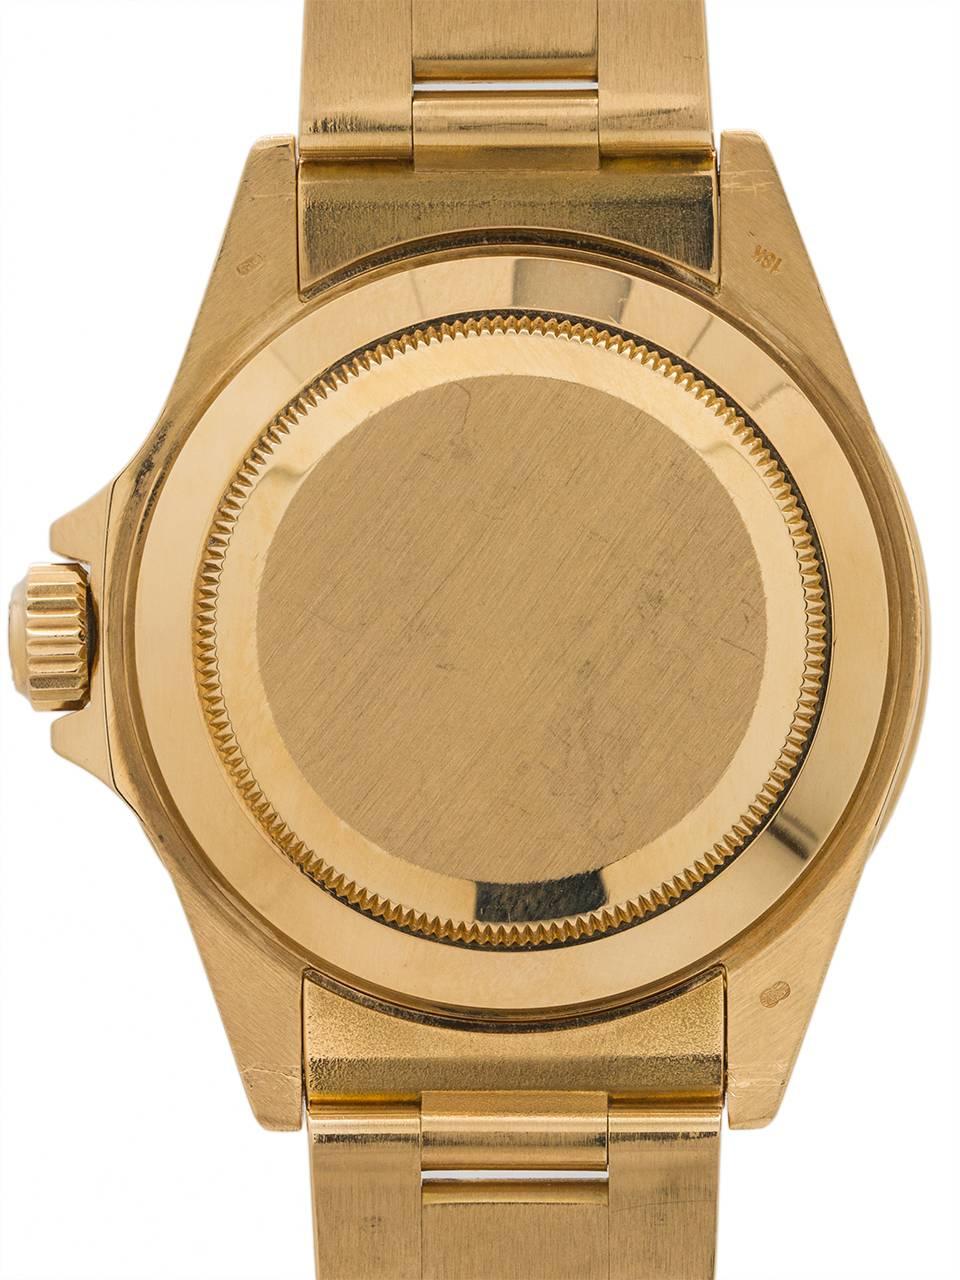 Men's Rolex Yellow Gold Submariner Transitional Model Wristwatch Ref 16808, circa 1987